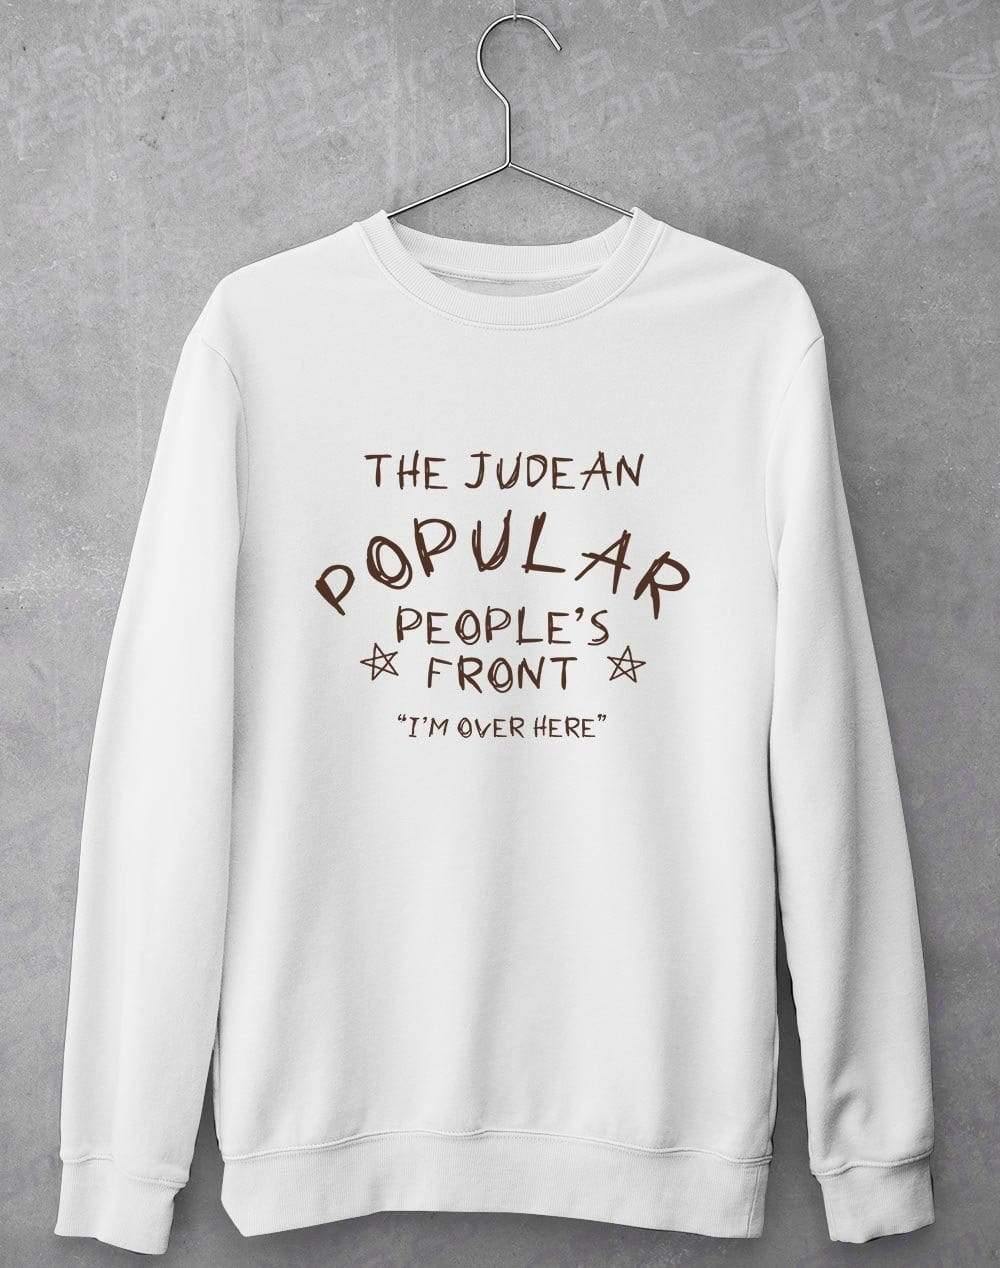 Judean Pupular Peoples Front Sweatshirt S / White  - Off World Tees